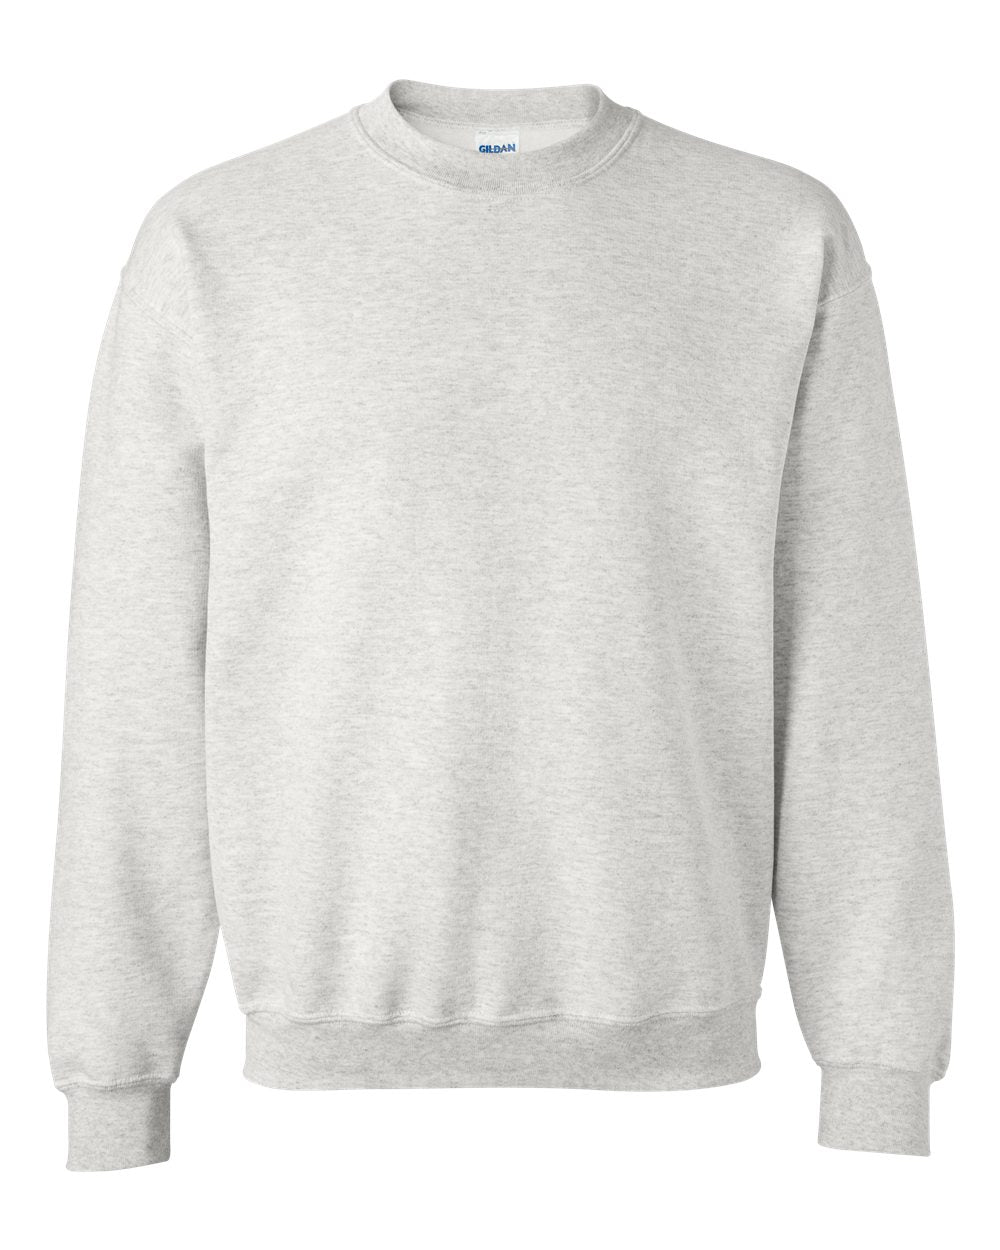 DryBlend - Men's Crewneck Sweatshirt - Gildan 12000